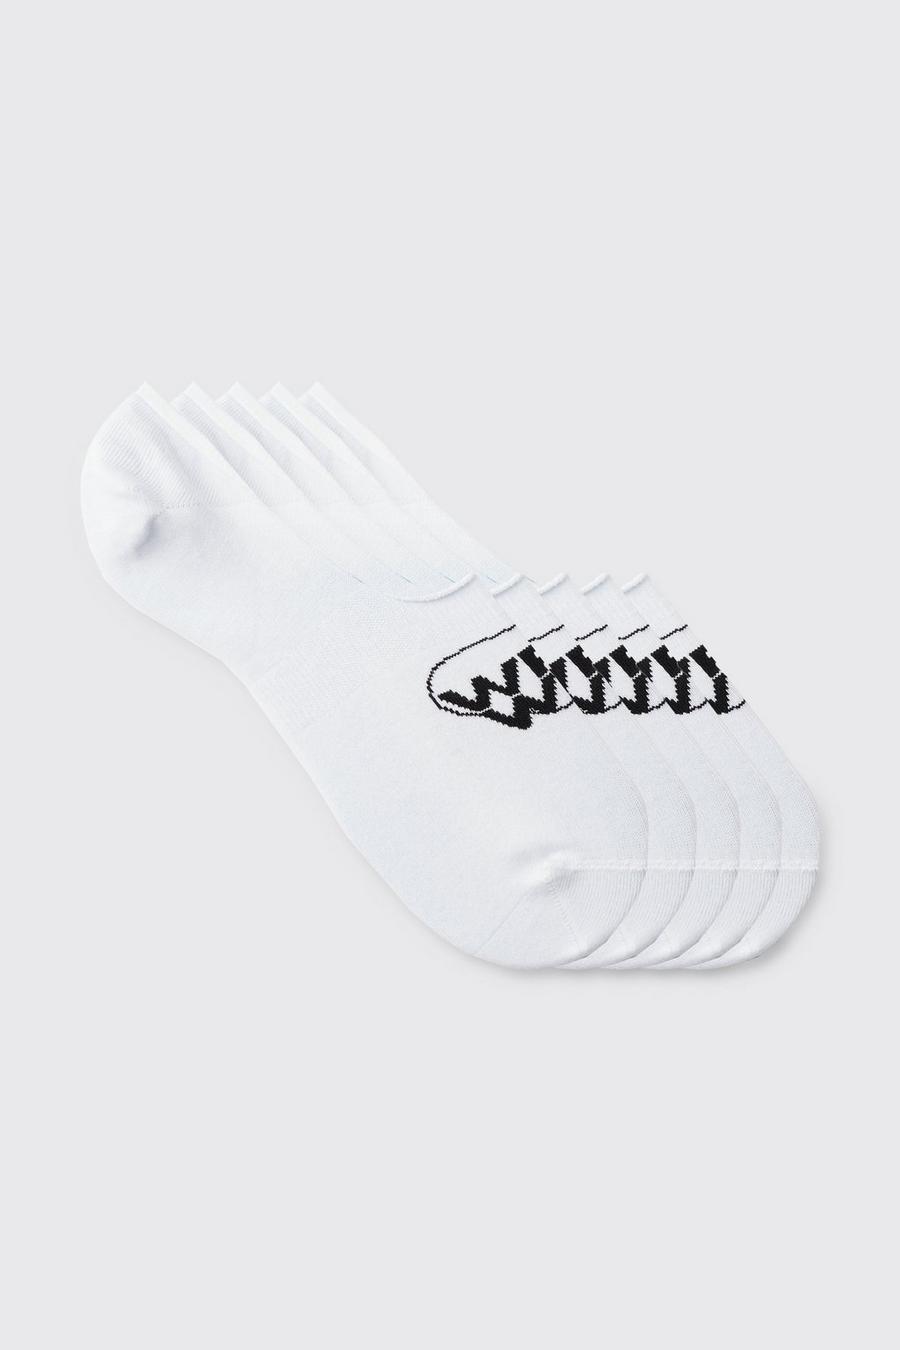 5er-Pack unsichtbare Worldwide-Socken, White